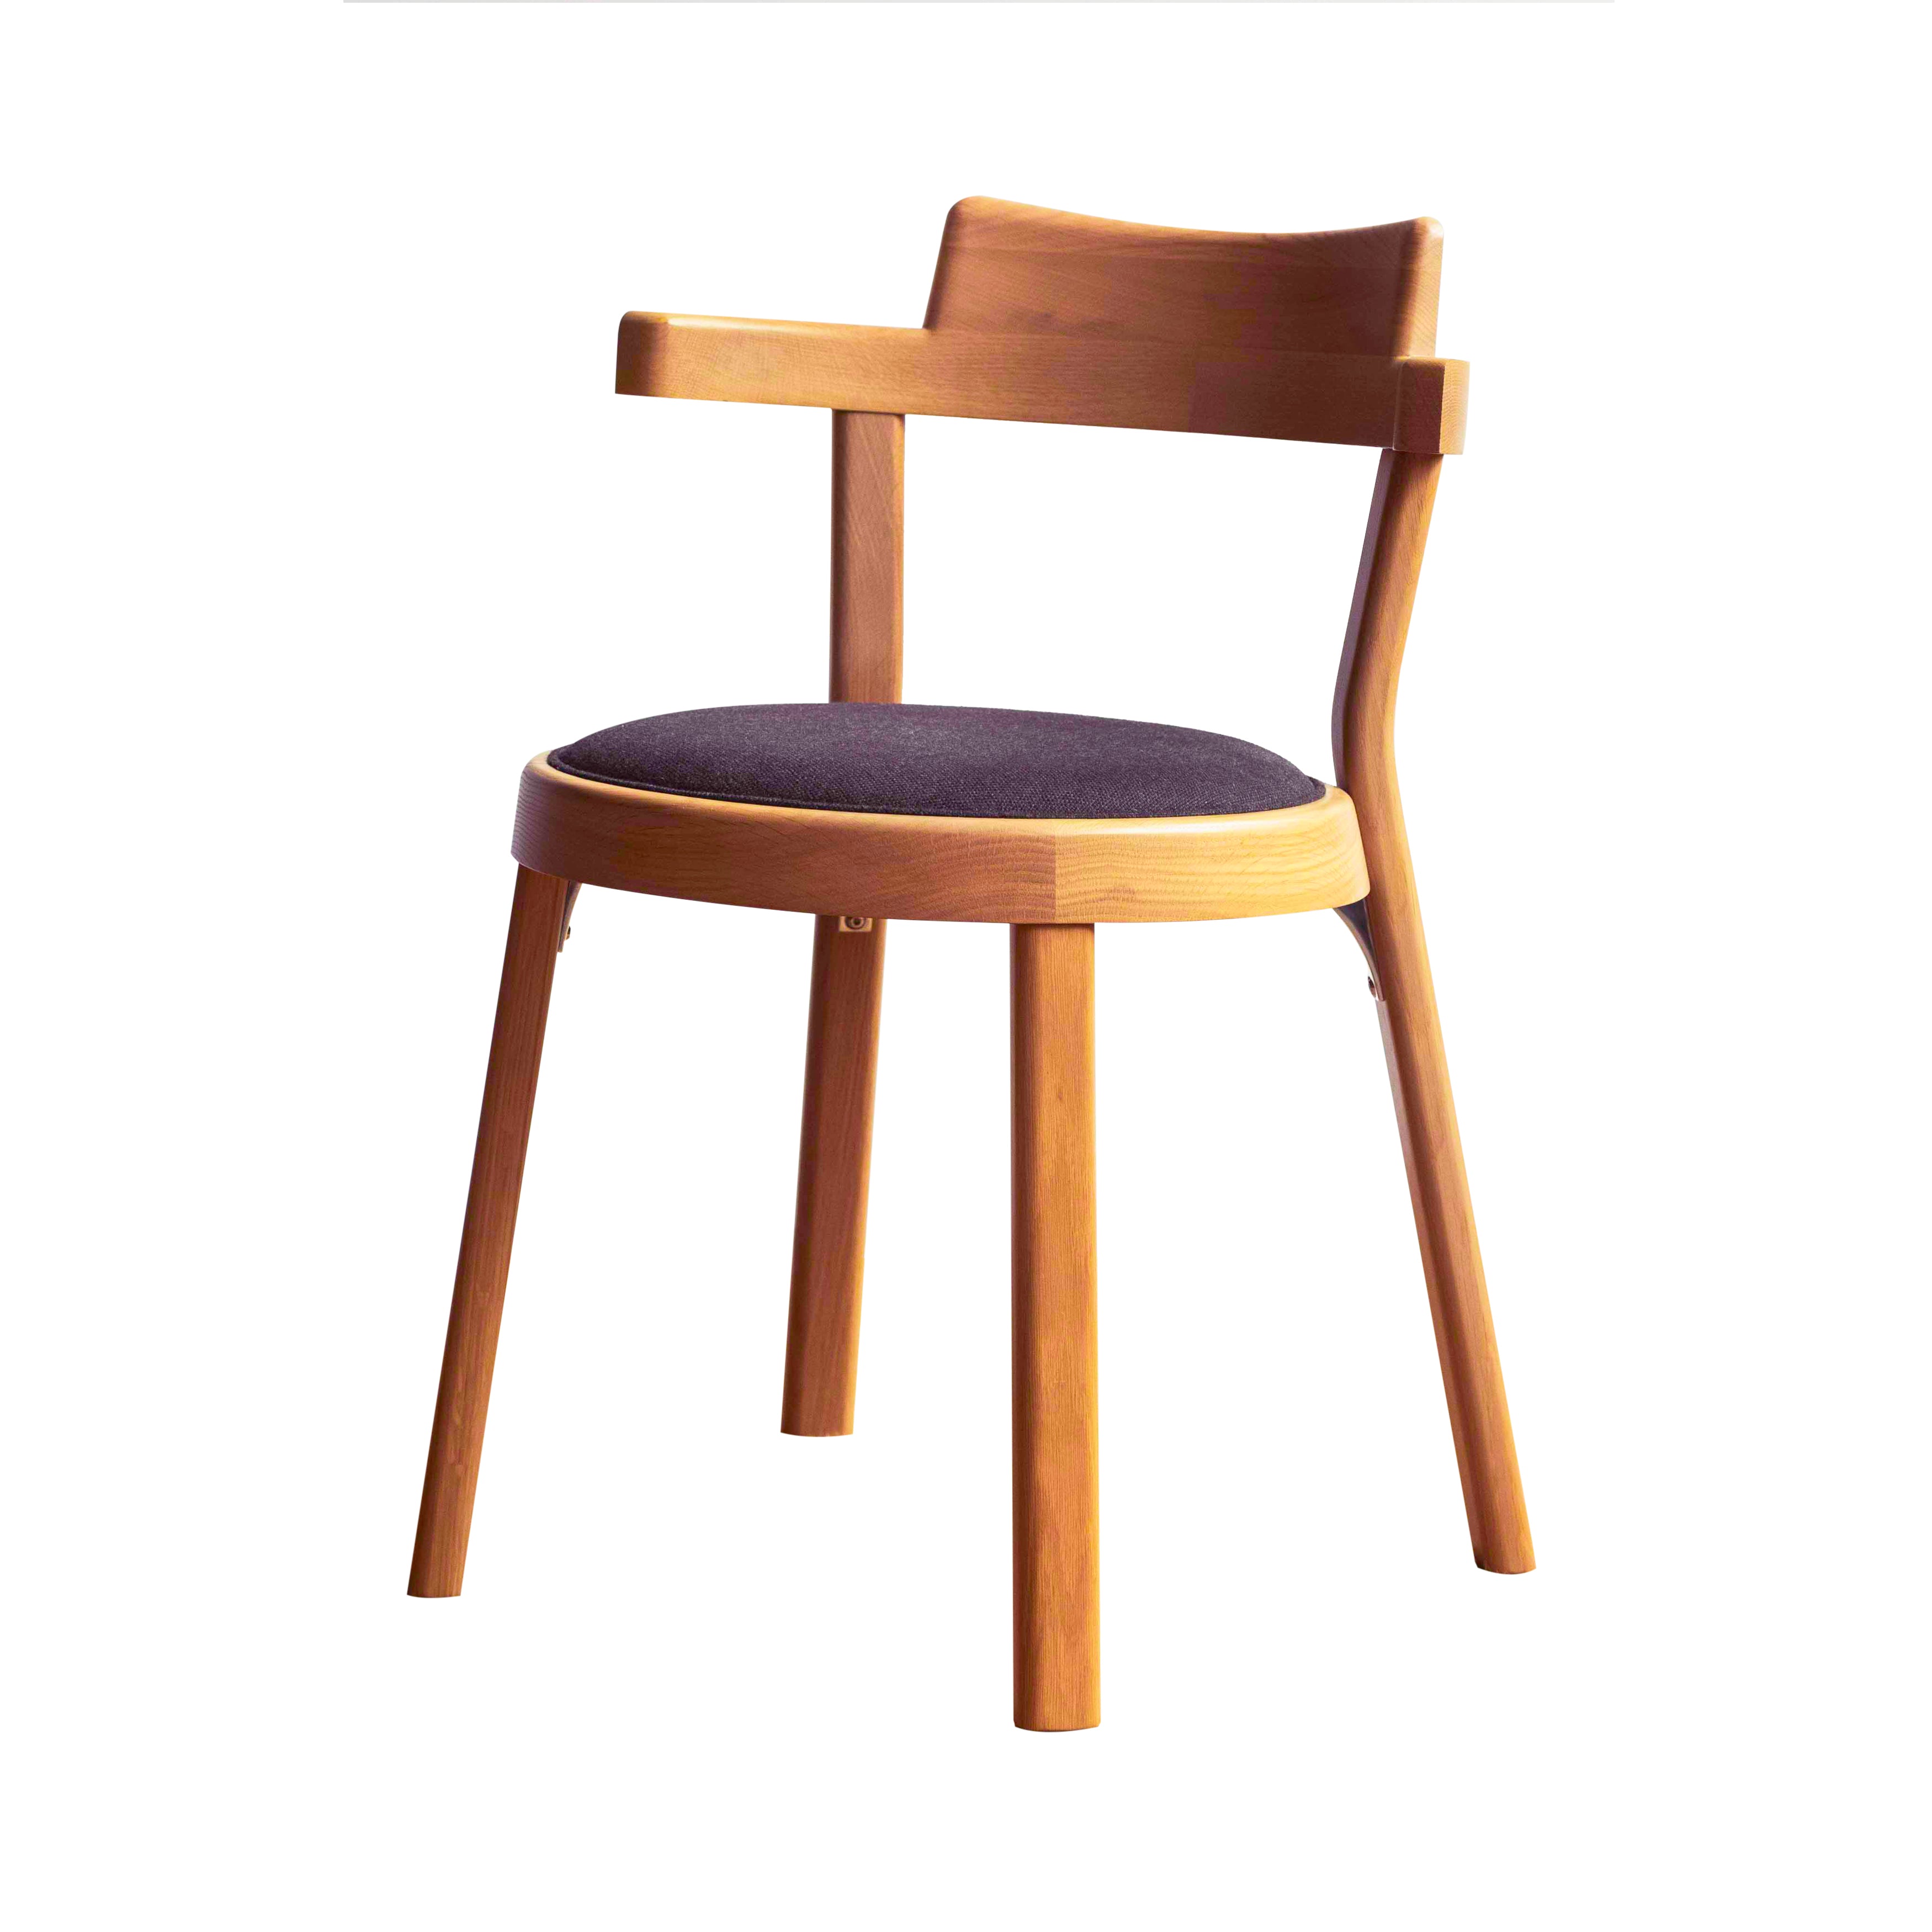 Pagoda Chair: Upholstery + Wood Leg + Natural Oak